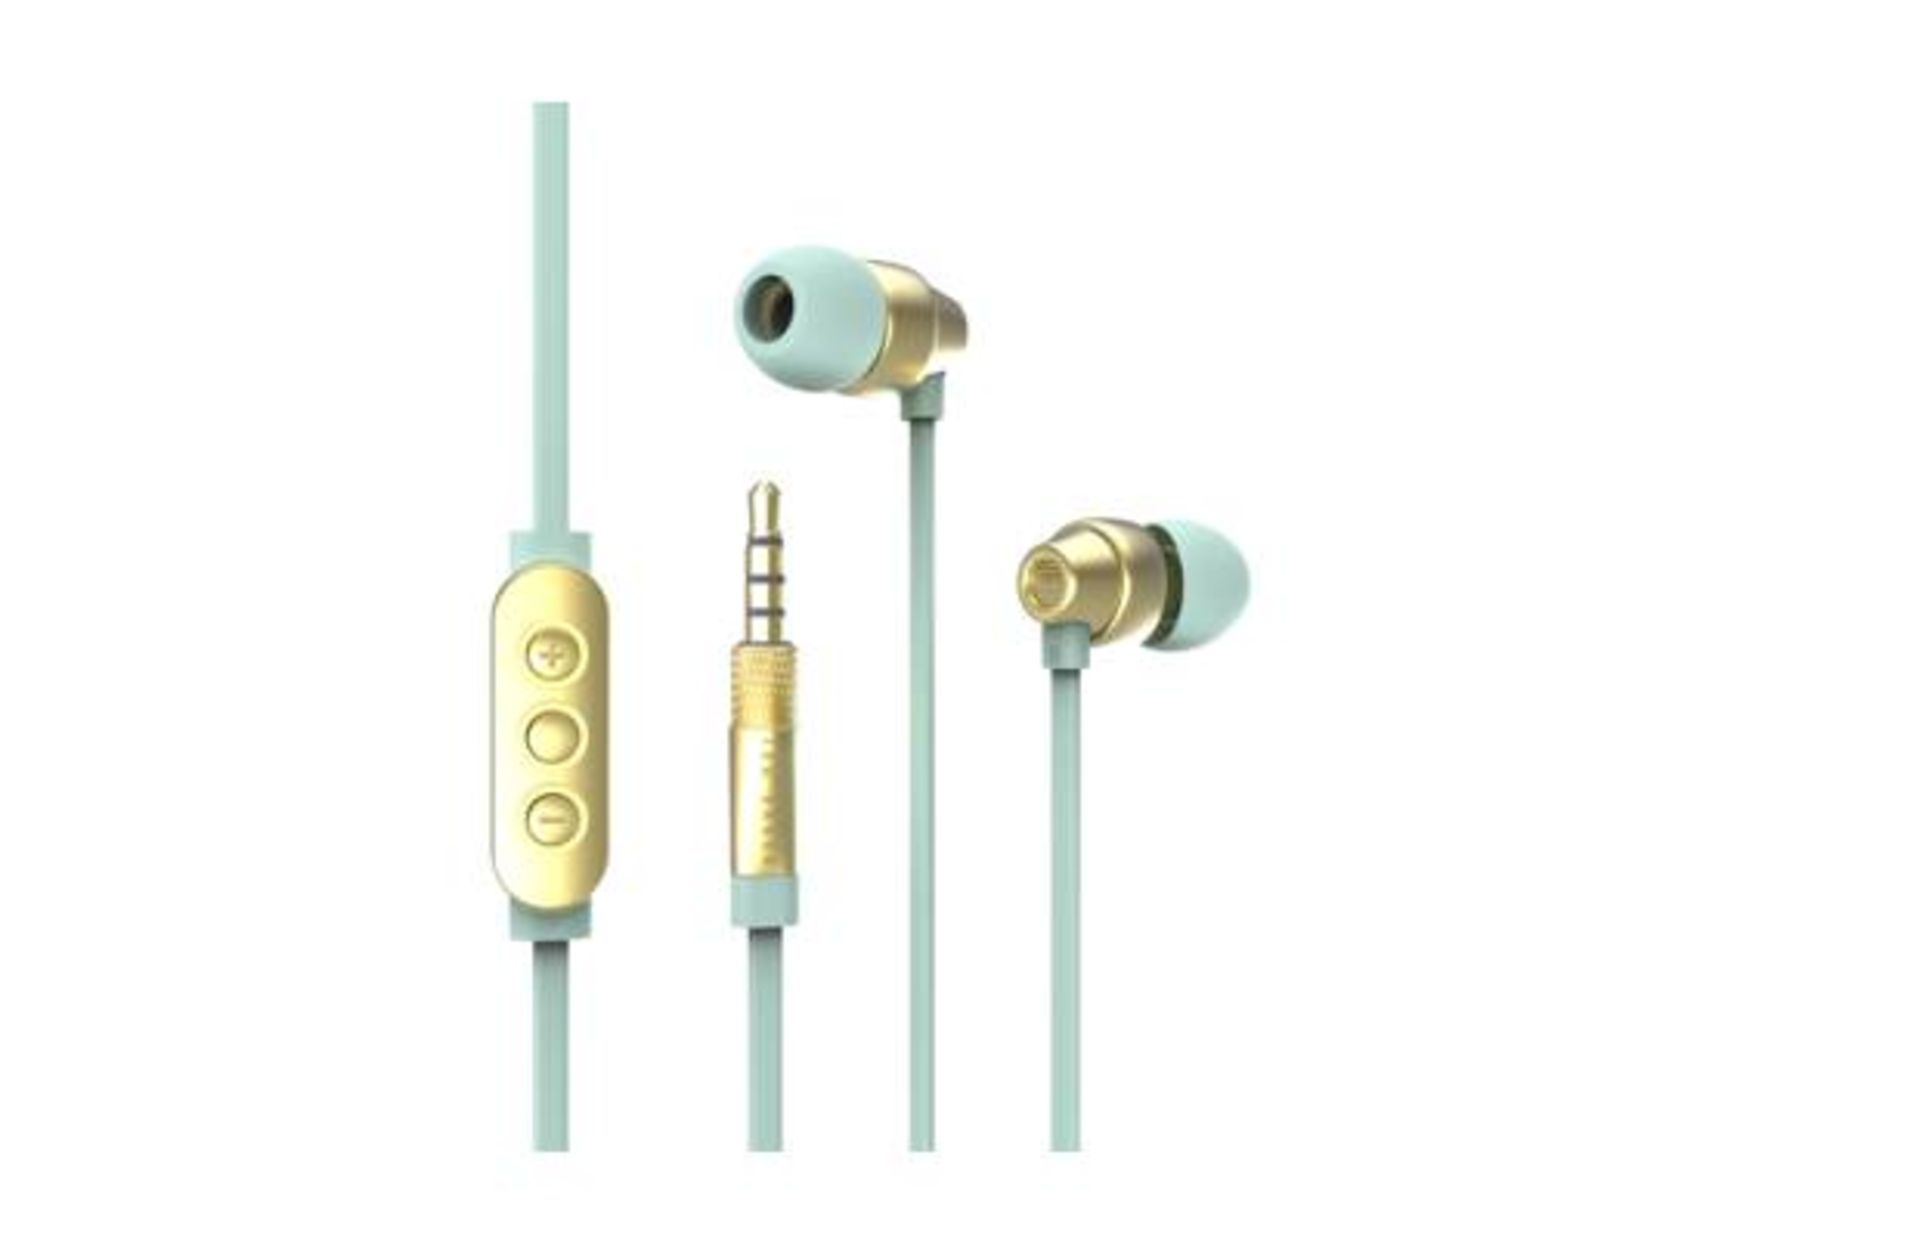 V Brand New Ted Baker Dover In-Ear Headphones - RRP £59.95 - In Mint/Gold - ISP £39.99 (Ebay) - Image 6 of 6